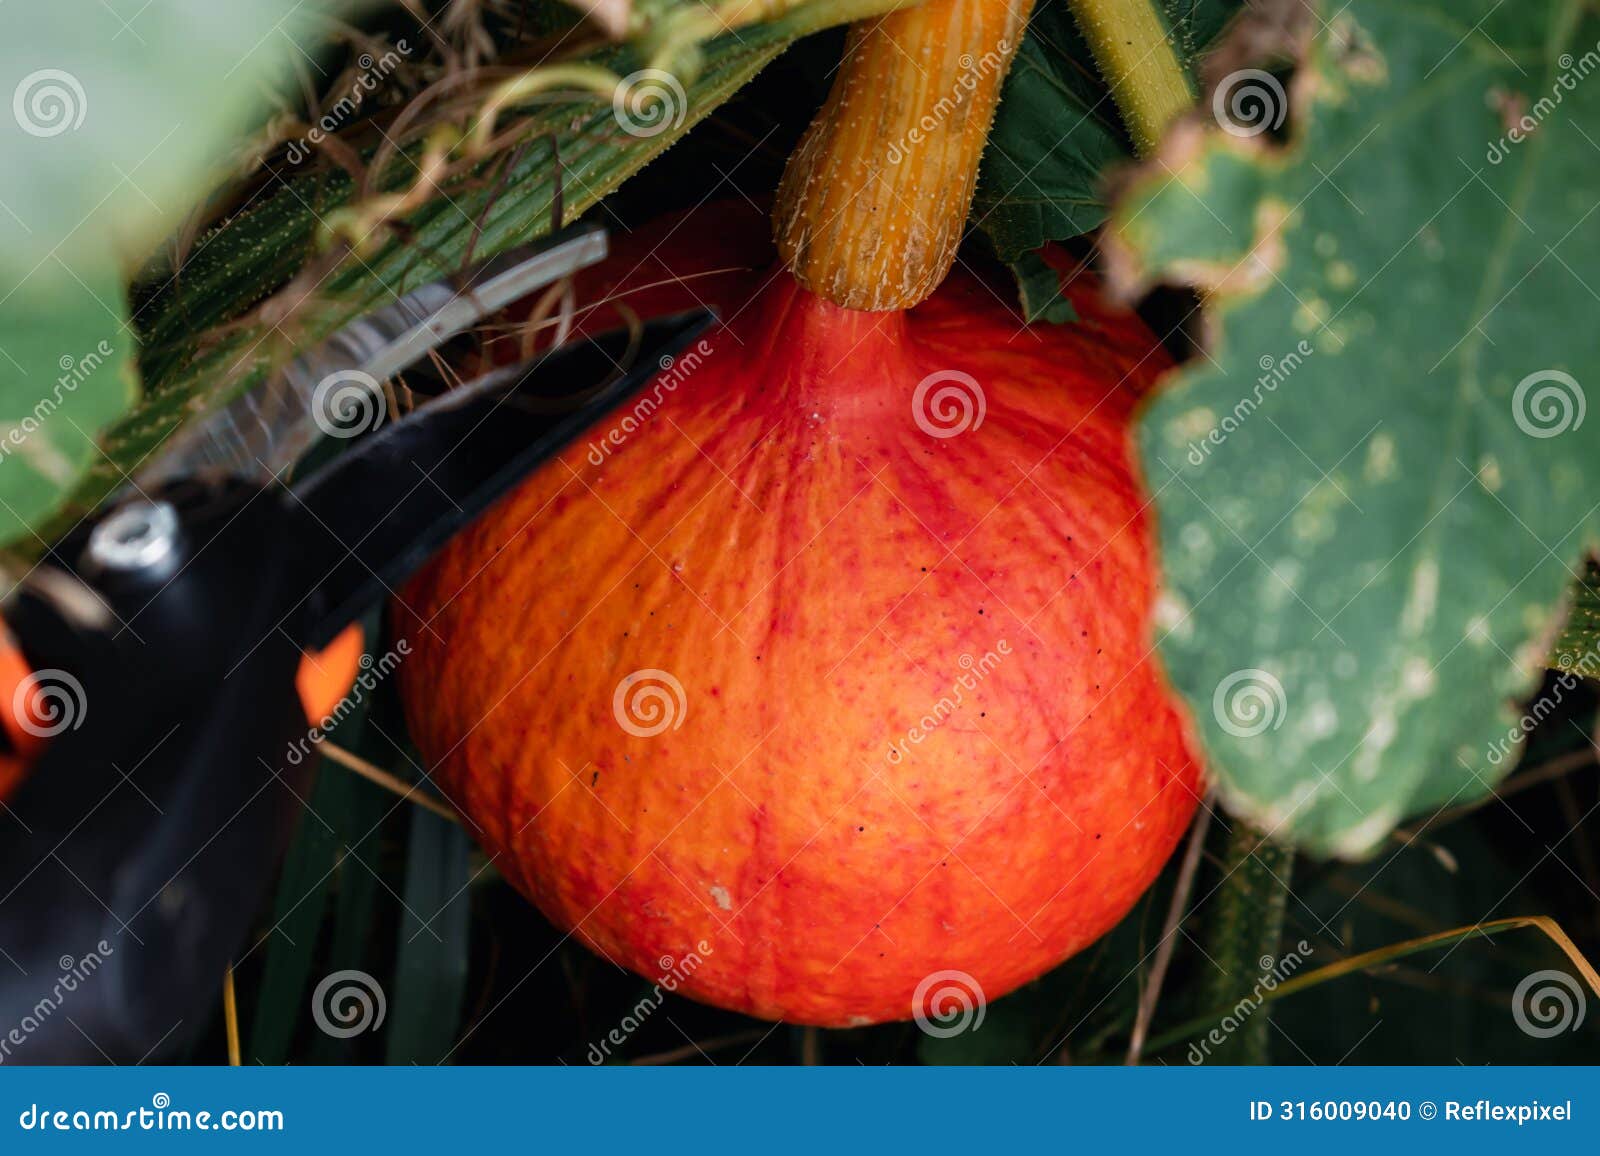 red kuri squash or onion squash in an ecological garden, cucurbita maxima